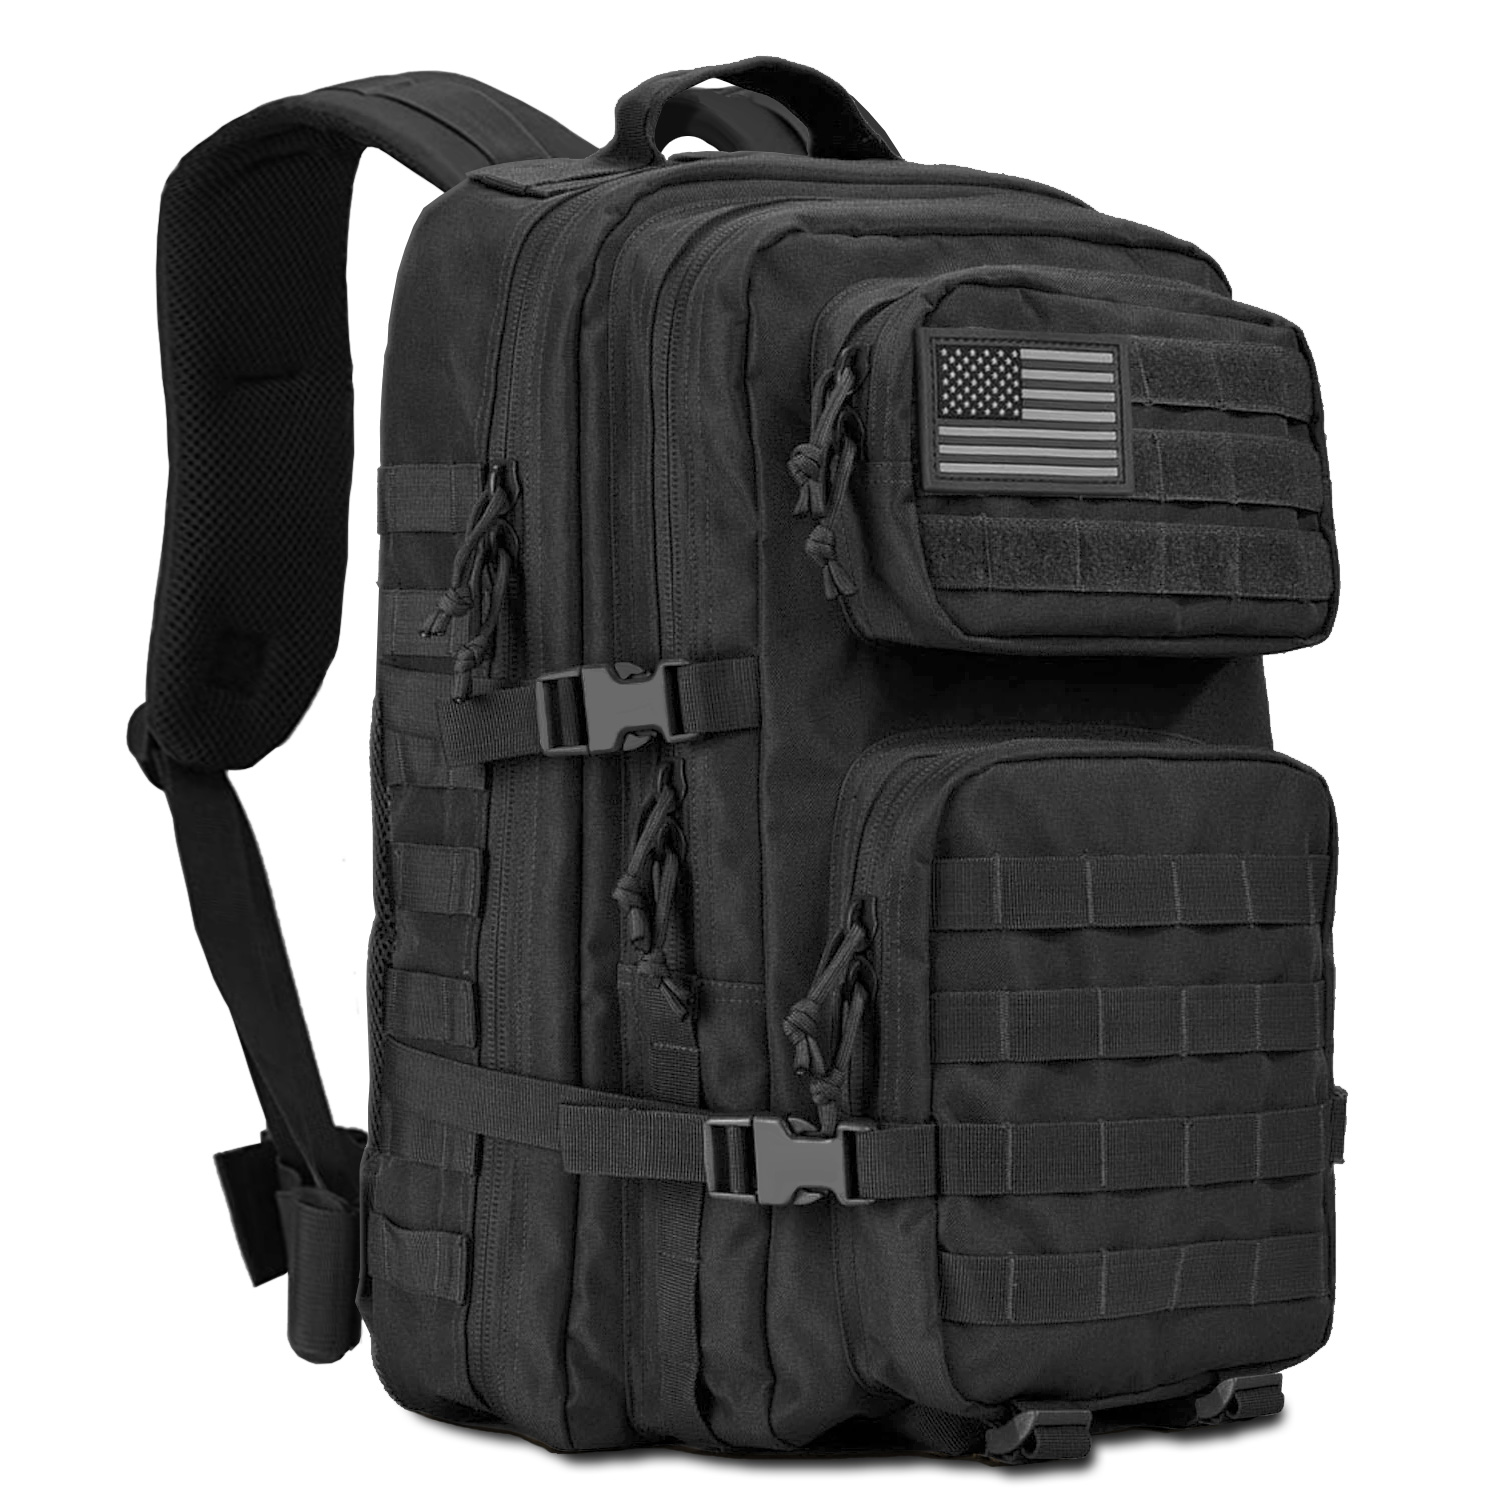 https://www.ecogearfx.com/wp-content/uploads/Tactical-BackpackX2-01.jpg